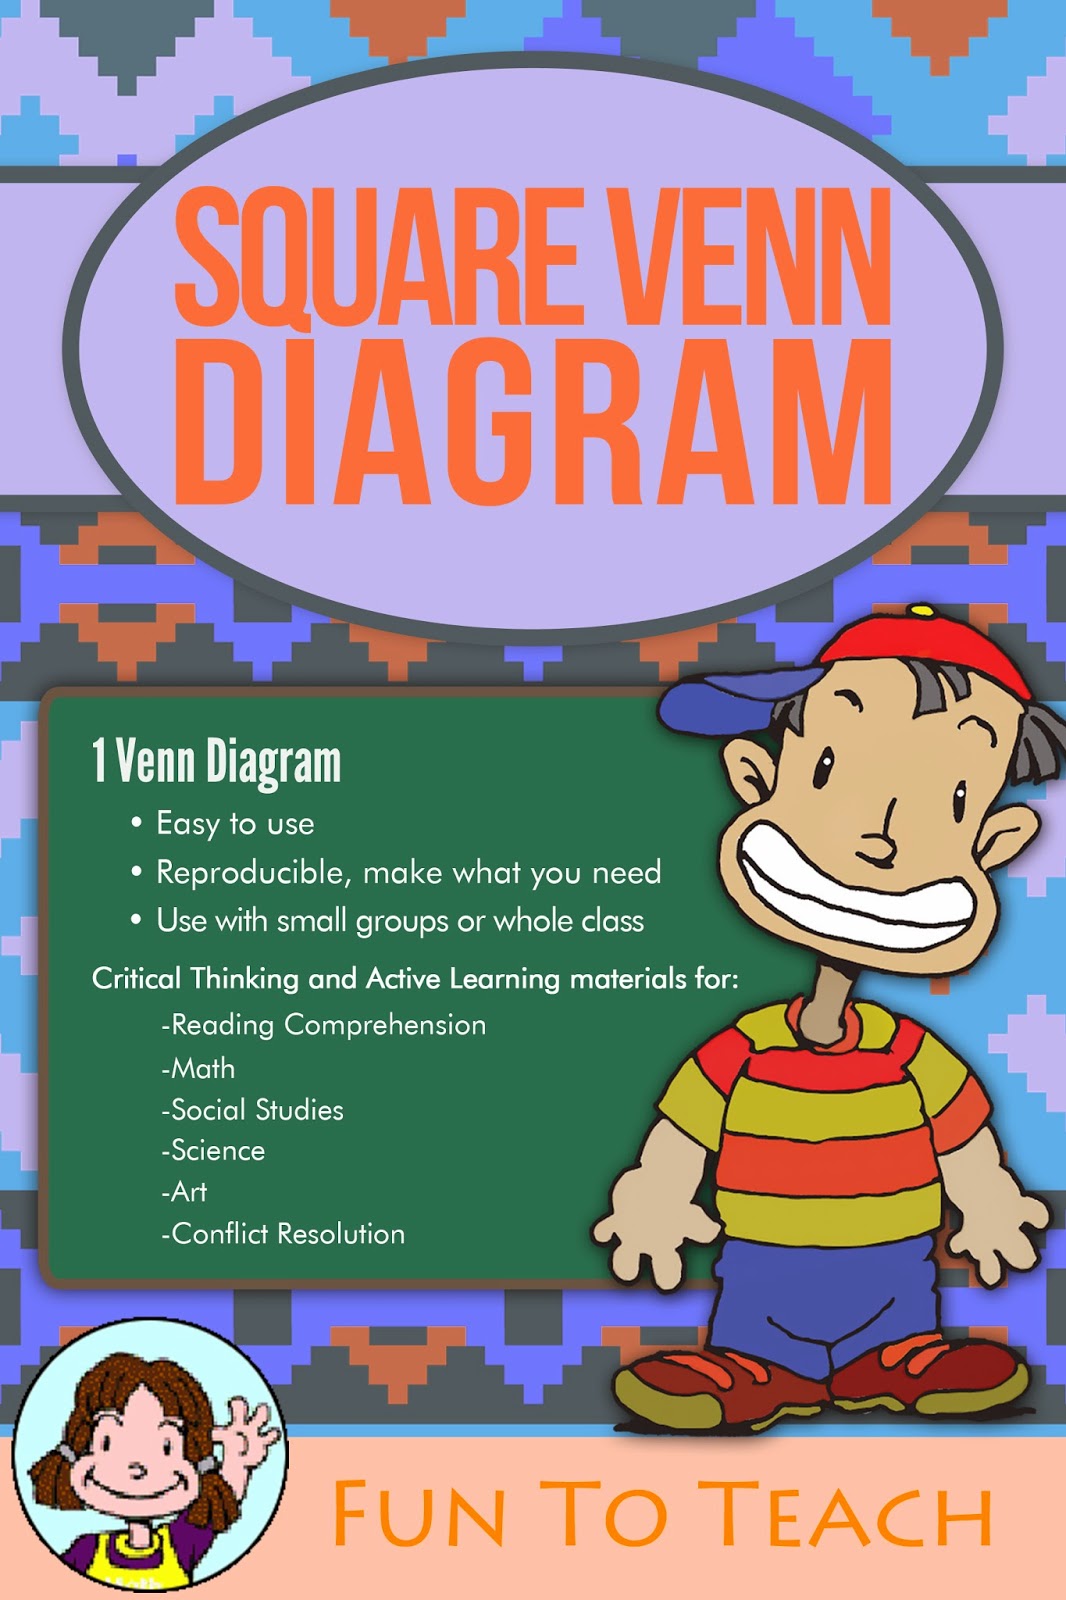 https://www.teacherspayteachers.com/Product/2-Square-Venn-Diagram-Graphic-Organizer-and-Lesson-Plan-88098